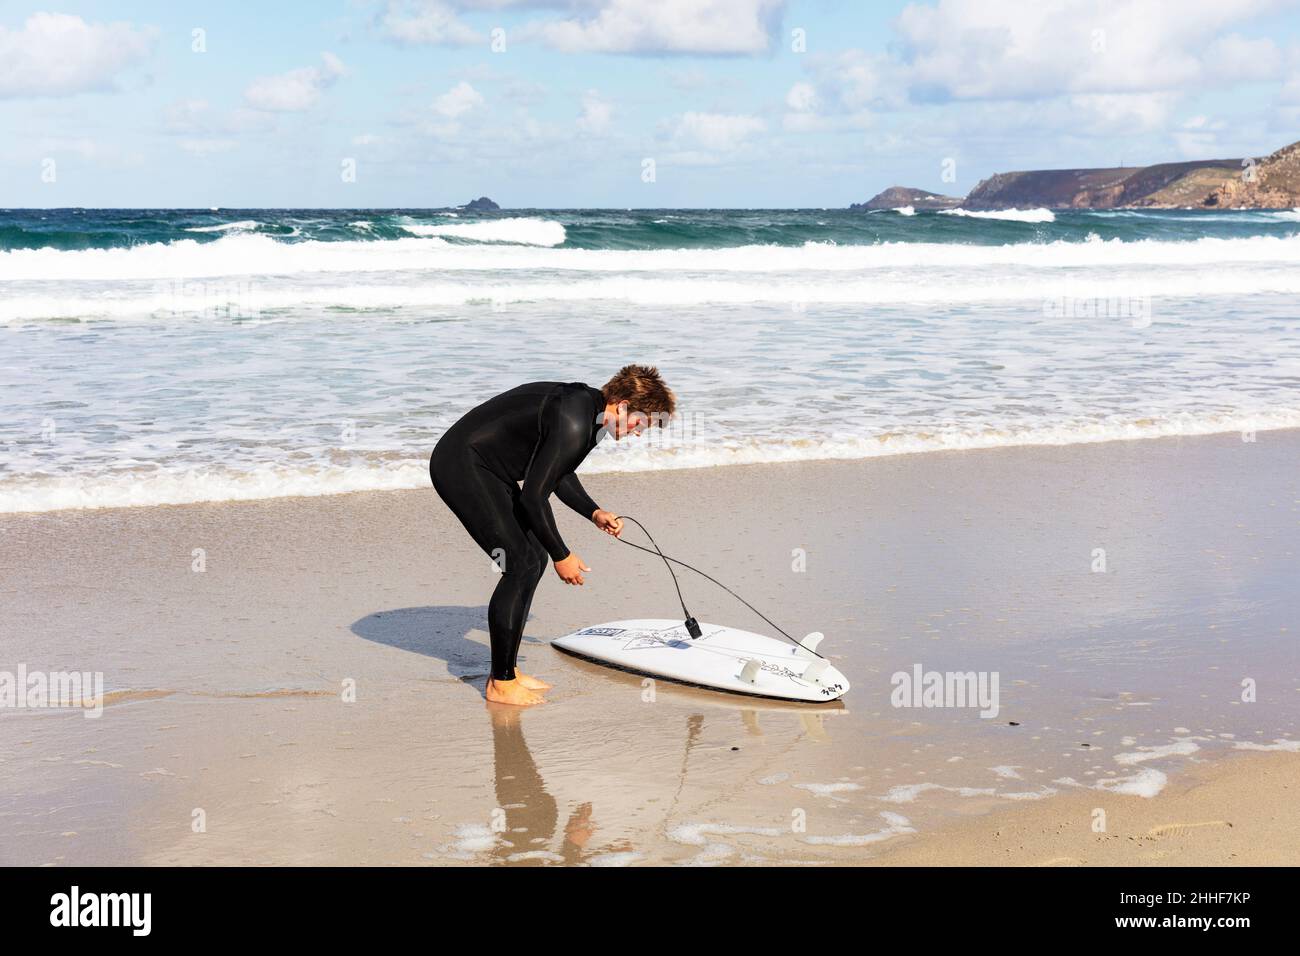 Surfer, surfer and surfboard, surfboard, Hayle beach, Cornwall, UK, England, Cornwall surfer, Cornwall surfboarding, surfboarder, surf boarder, sea Stock Photo